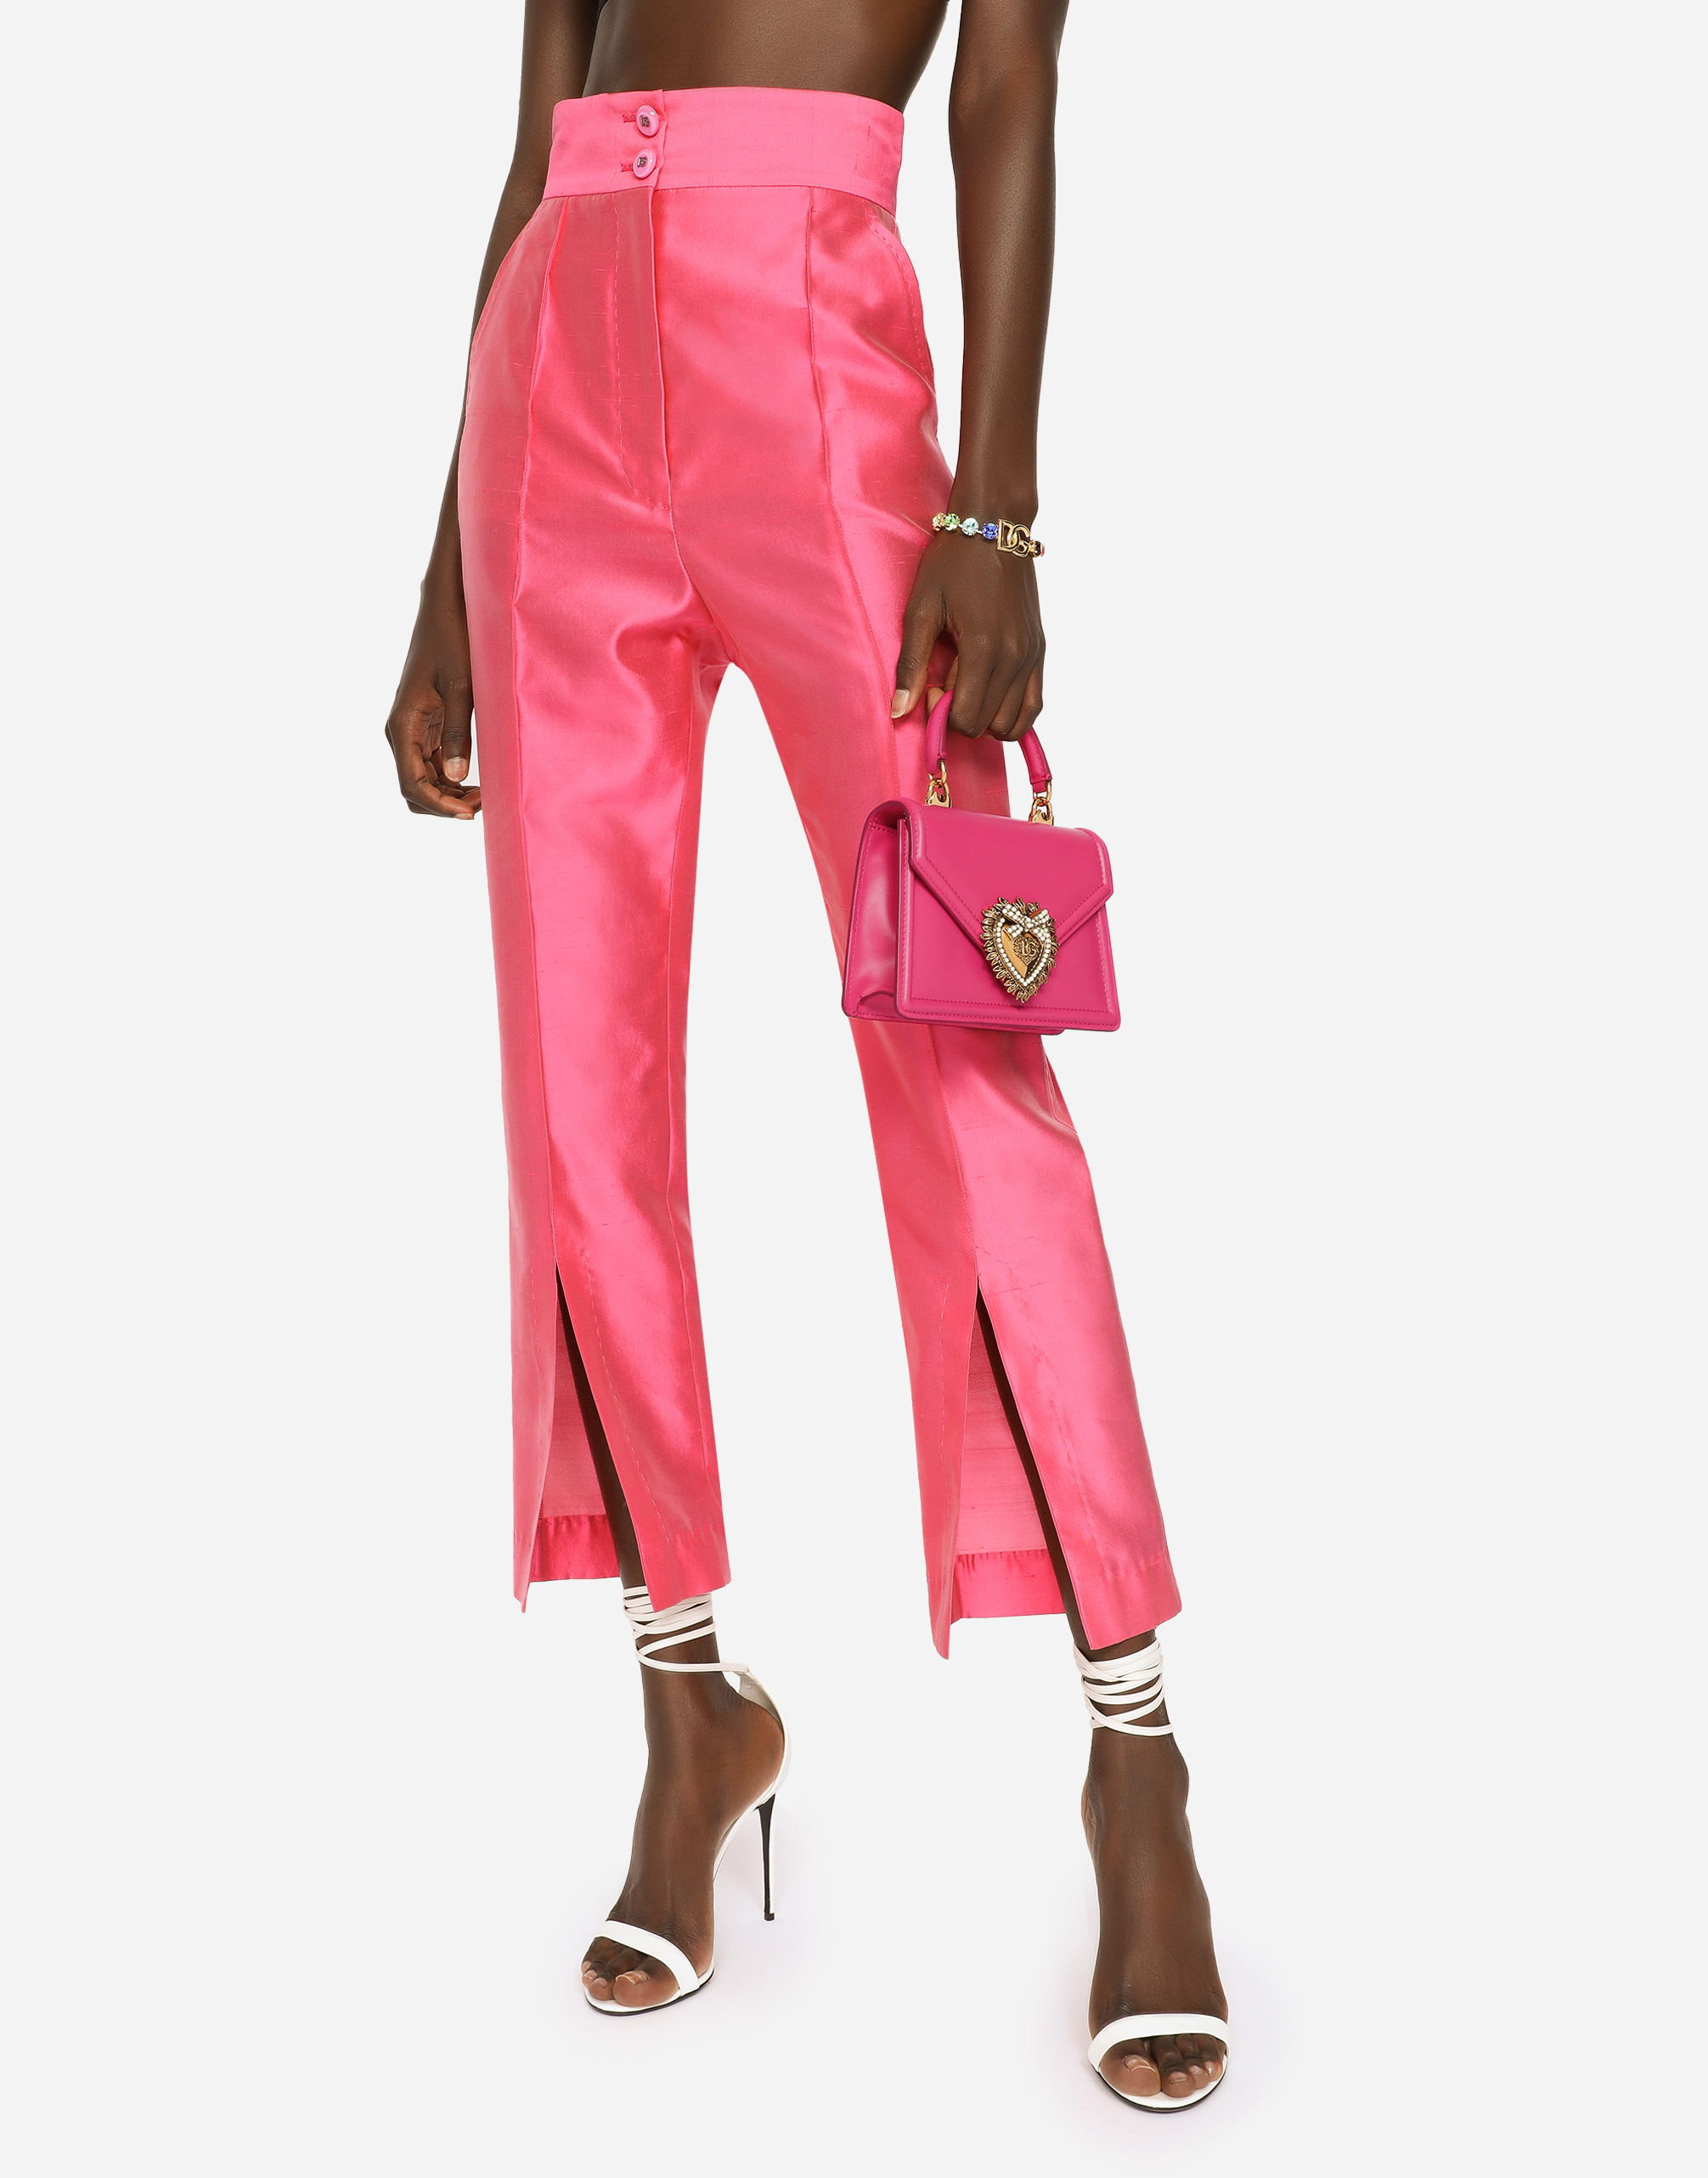 Shop Dolce & Gabbana Small Calfskin Devotion Bag In Pink